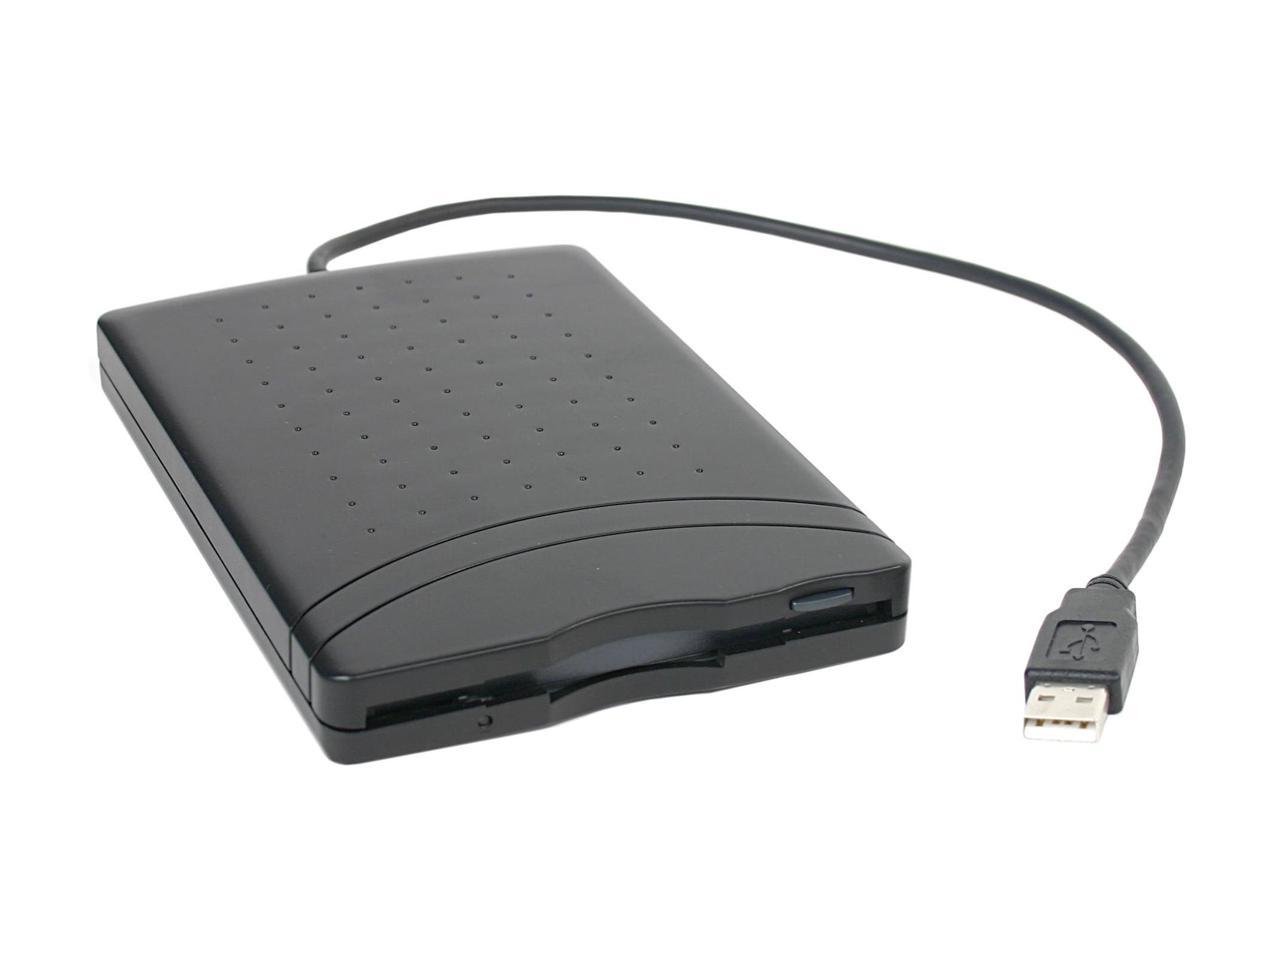 BYTECC Black External USB Drive Model Newegg.com